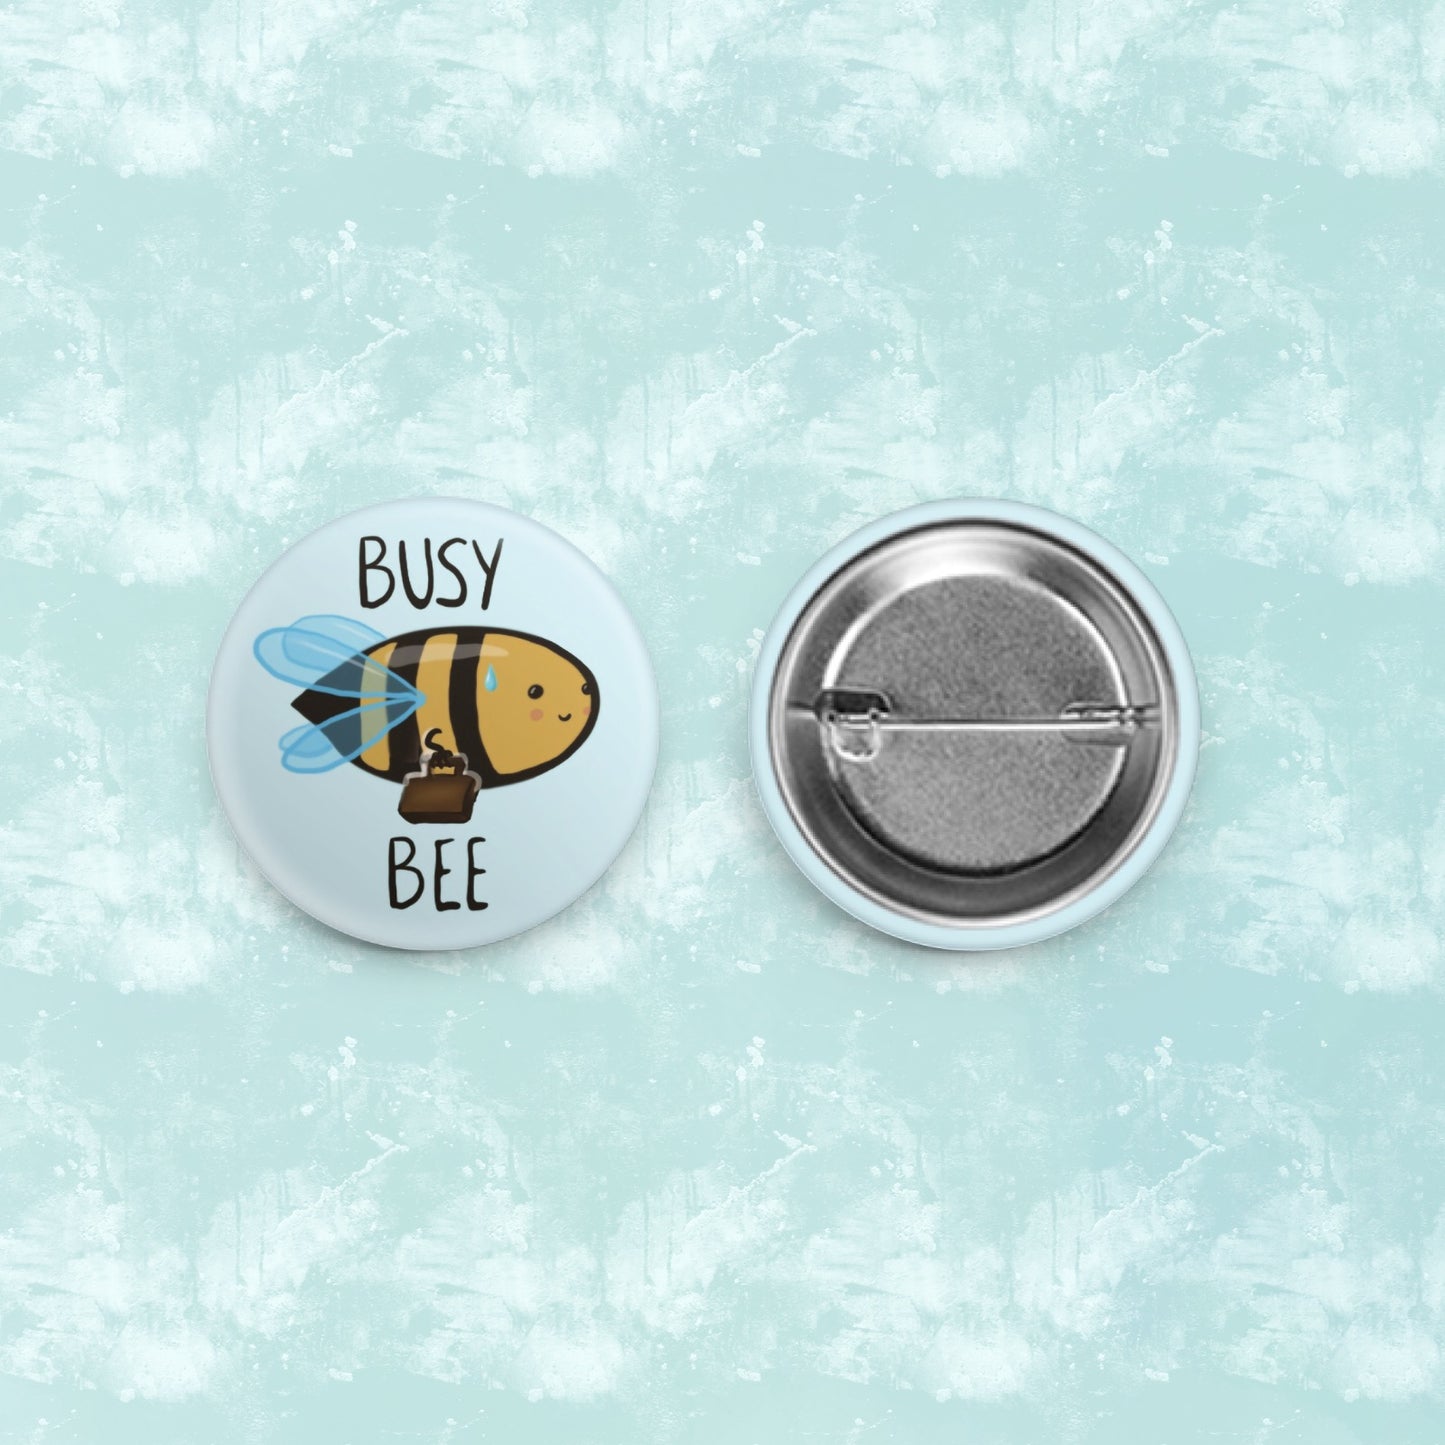 "Busy Bee" badge